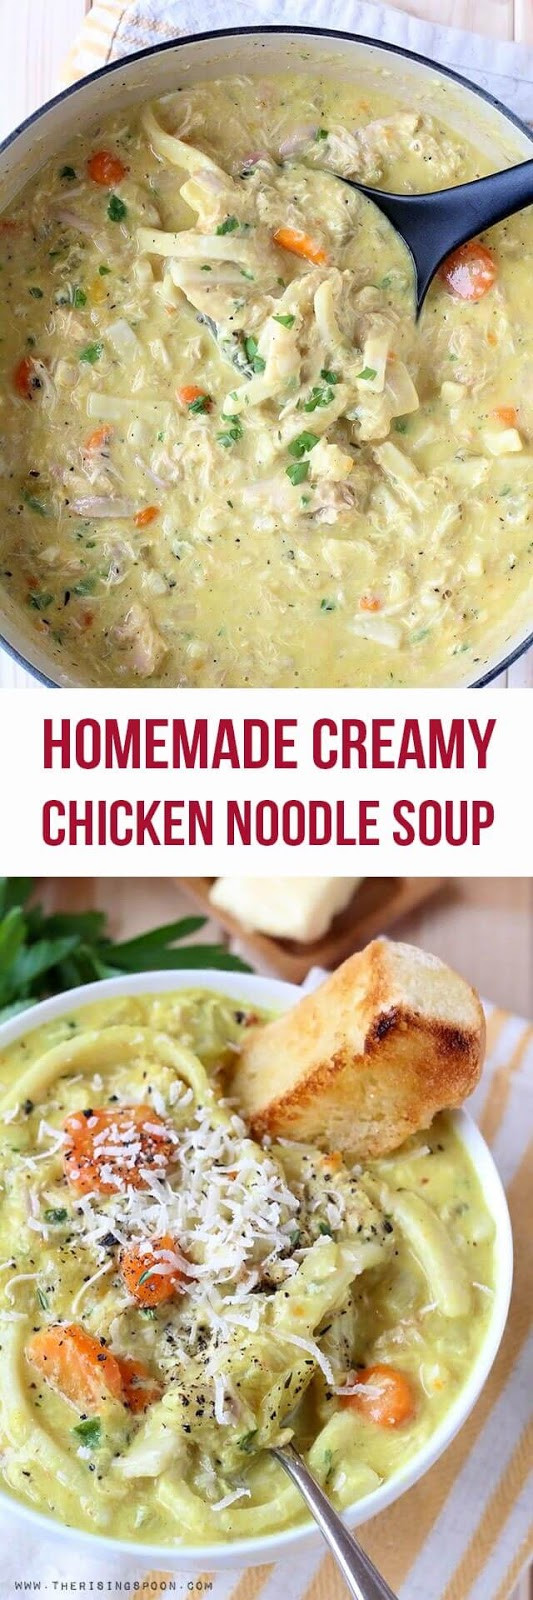 Homemade Creamy Chicken Noodle Soup
 Homemade Creamy Chicken Noodle Soup